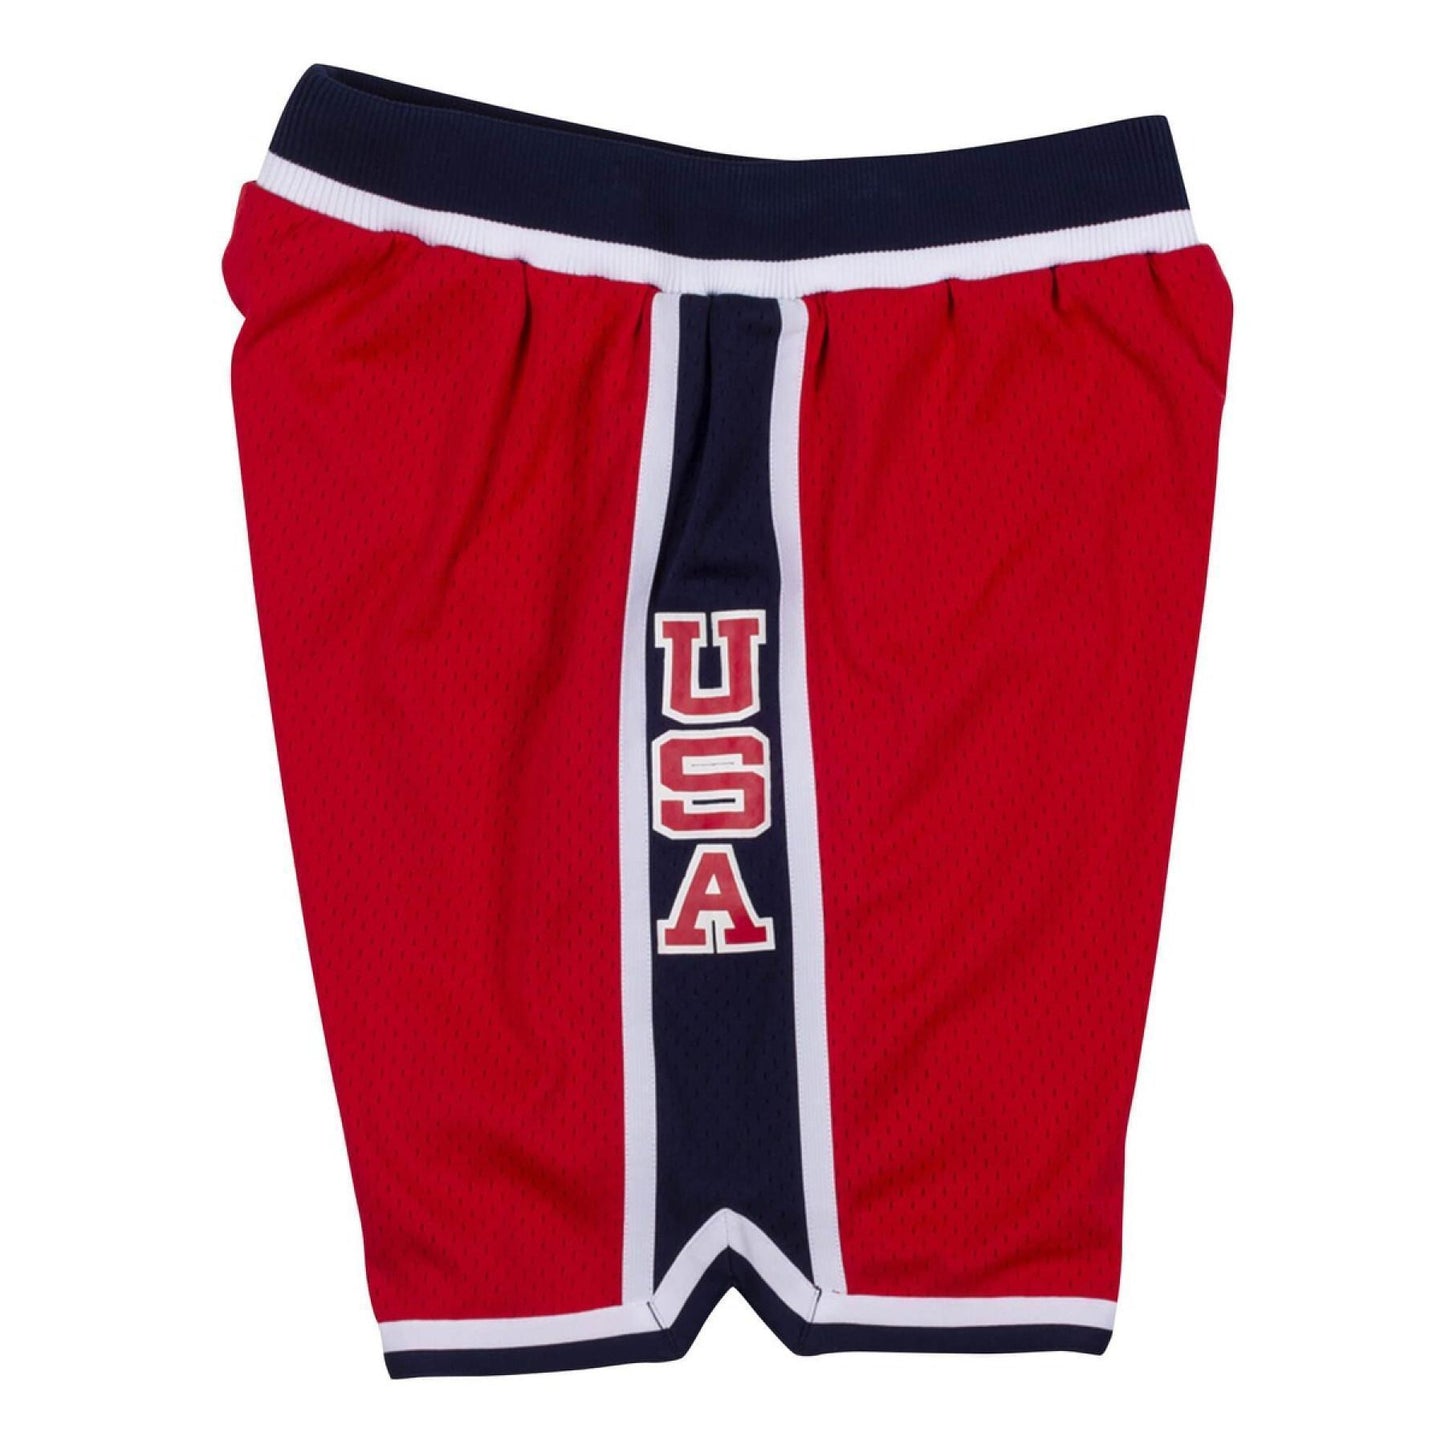 NBA Authentic Alternate Shorts Team USA Mens 1984